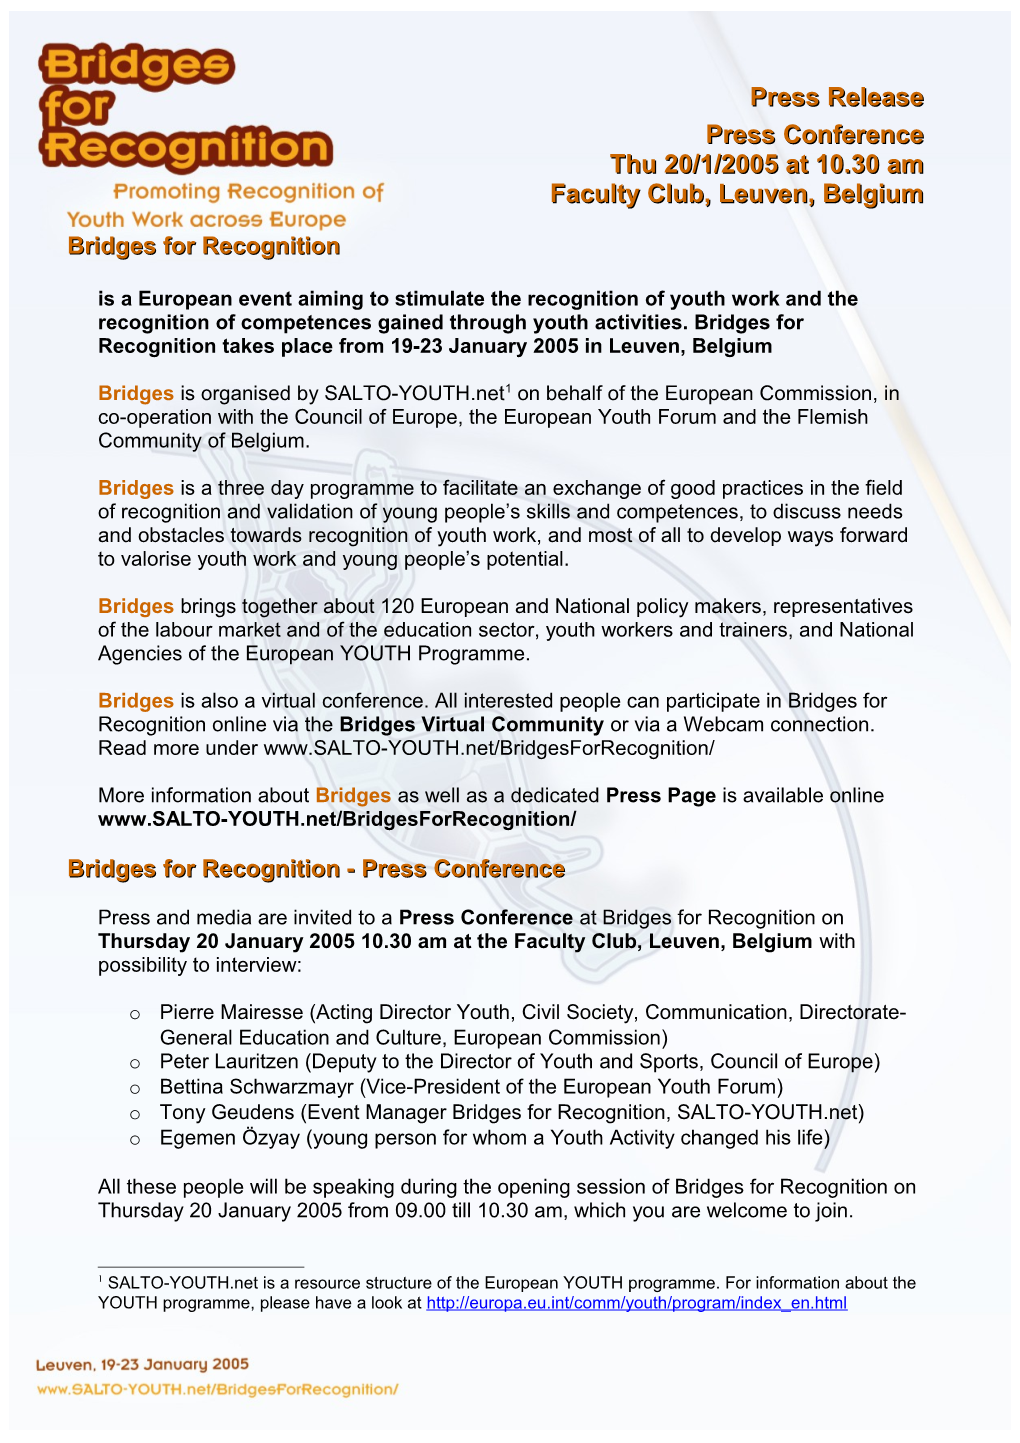 Bridges for Recognition - Invitation